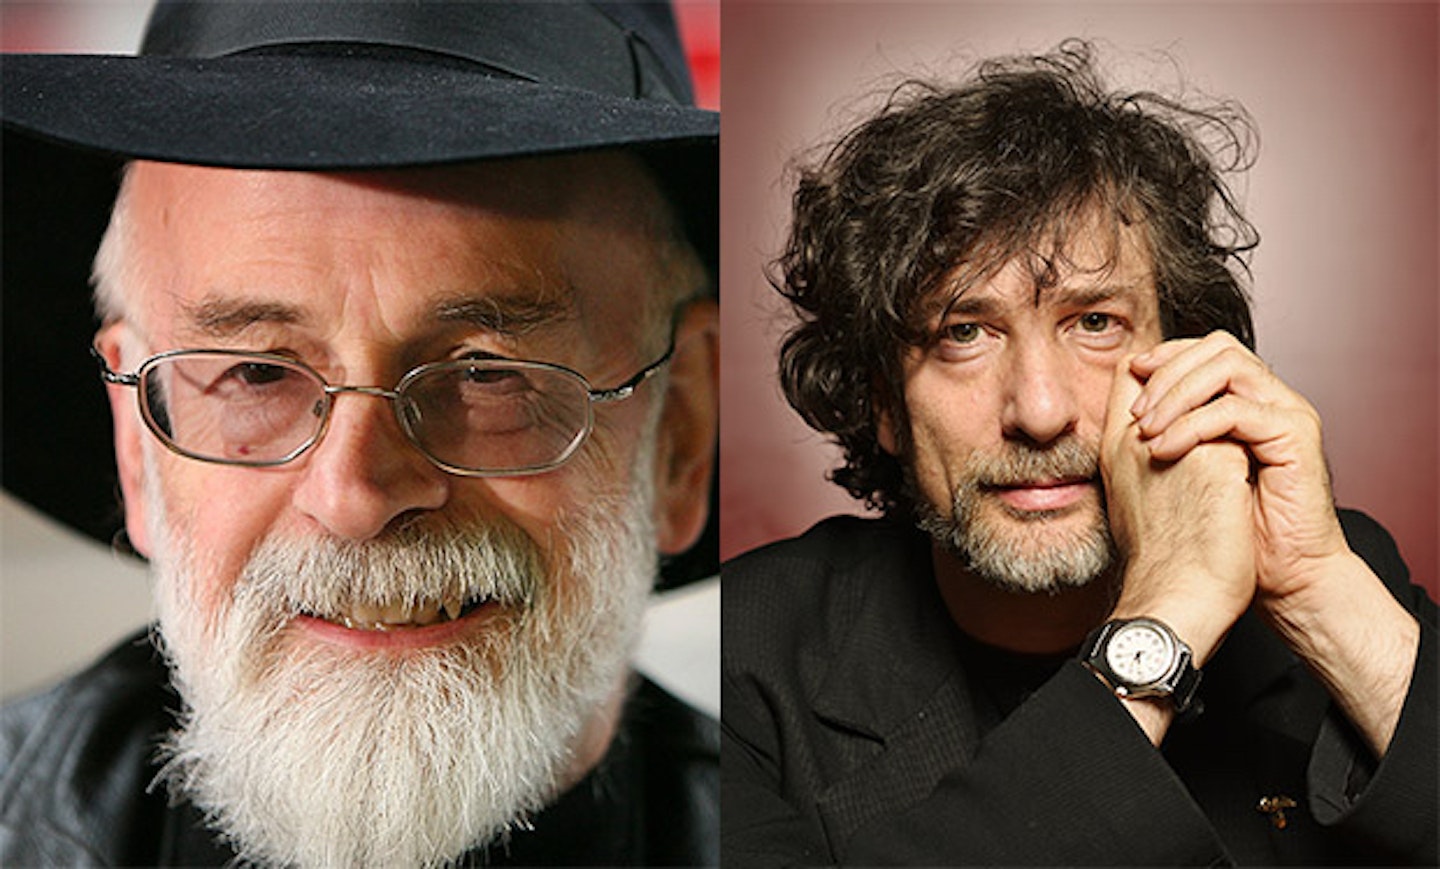 Terry Pratchett and Neil Gaiman